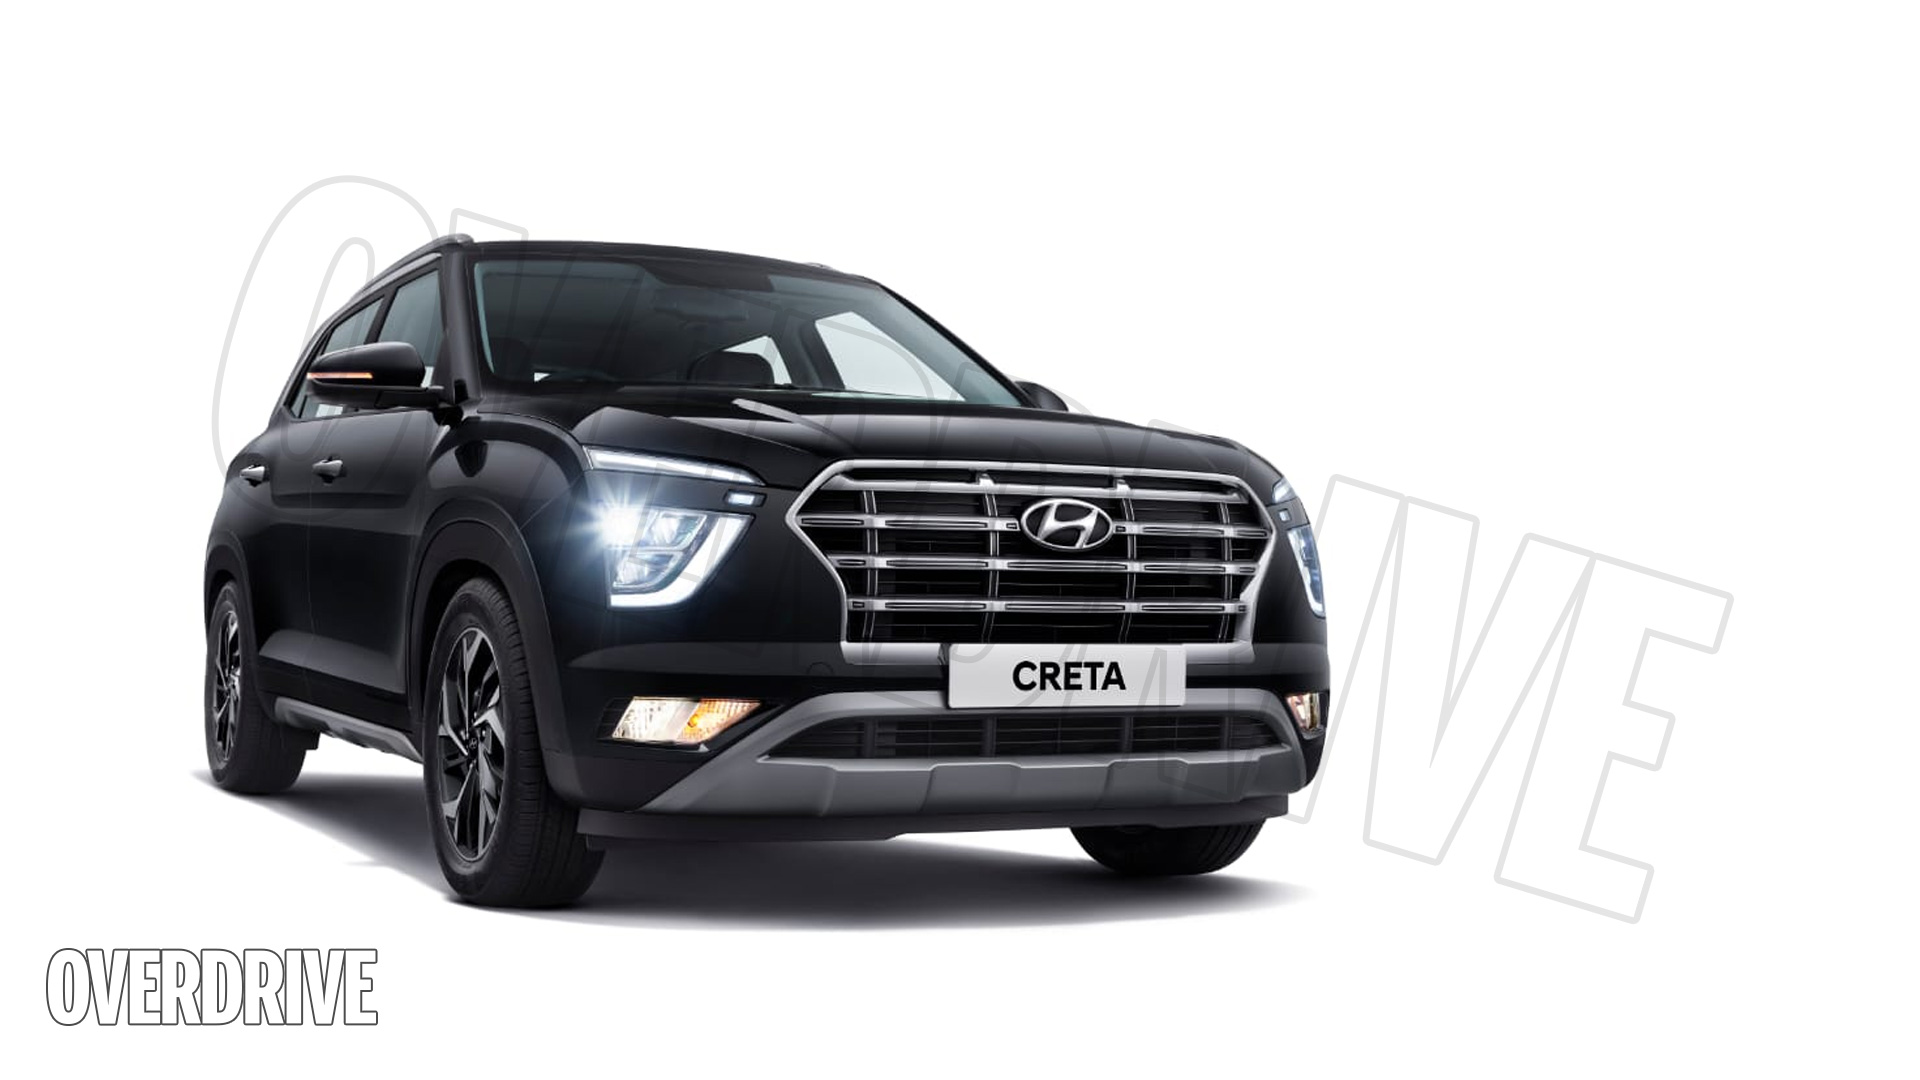 Hyundai Creta Images - Interior & Exterior HD Photos